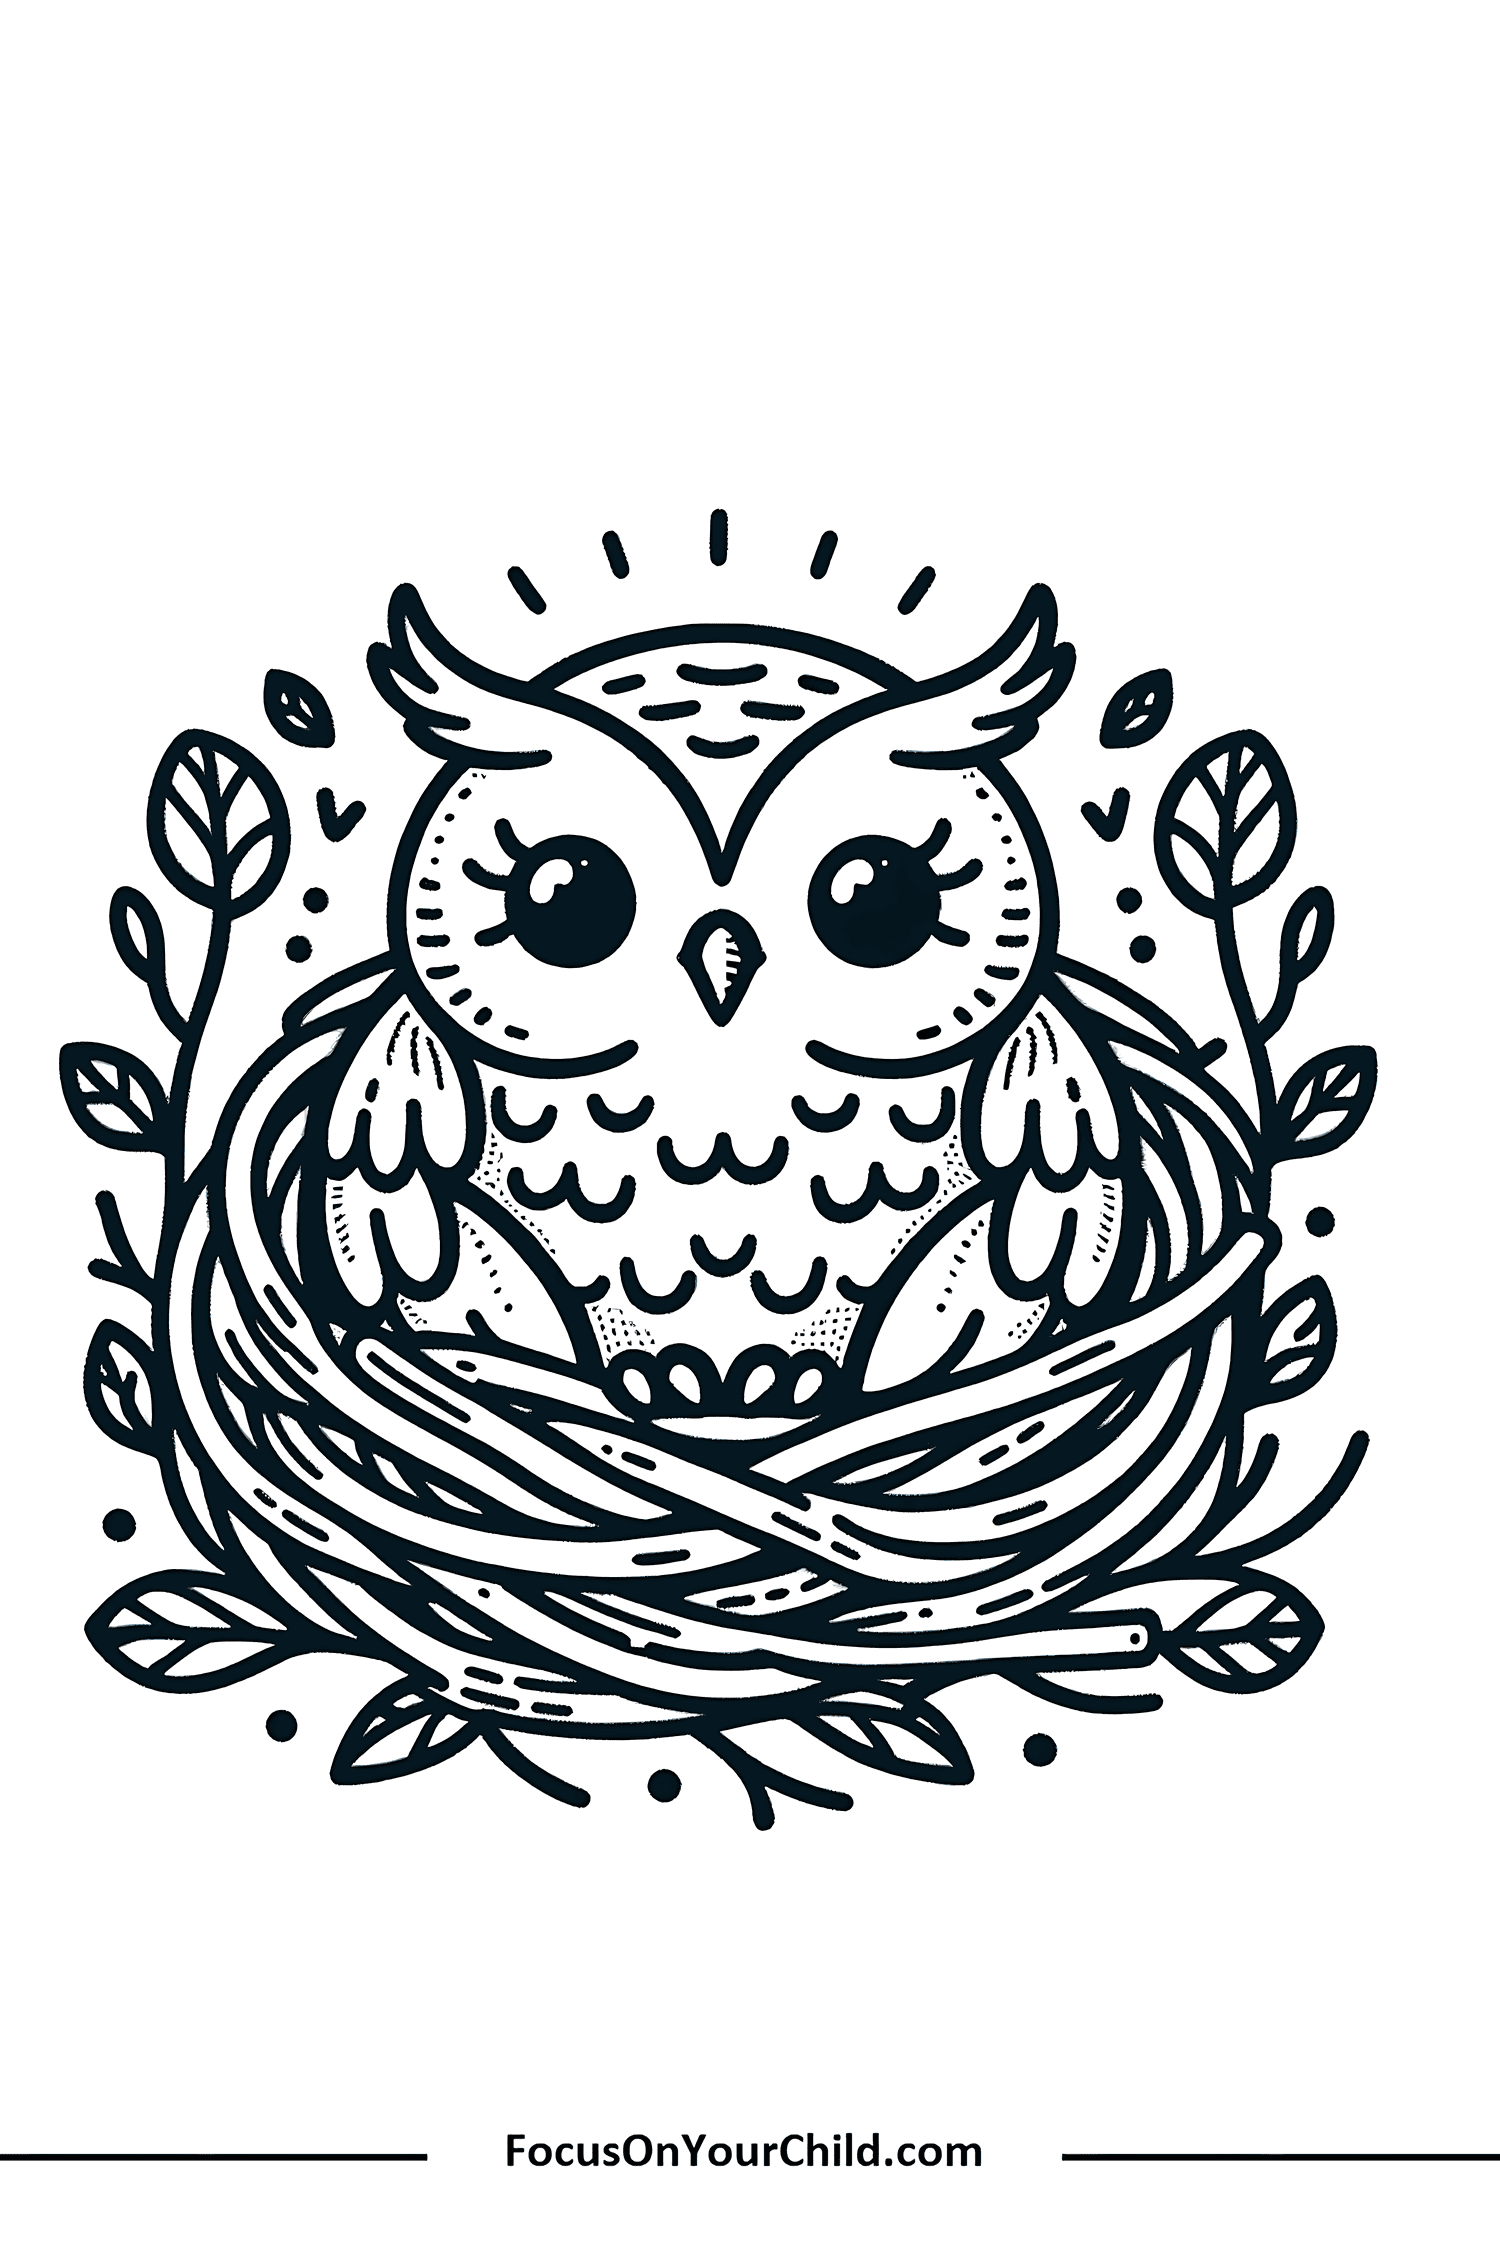 Cute owl in a detailed nest illustration for children.